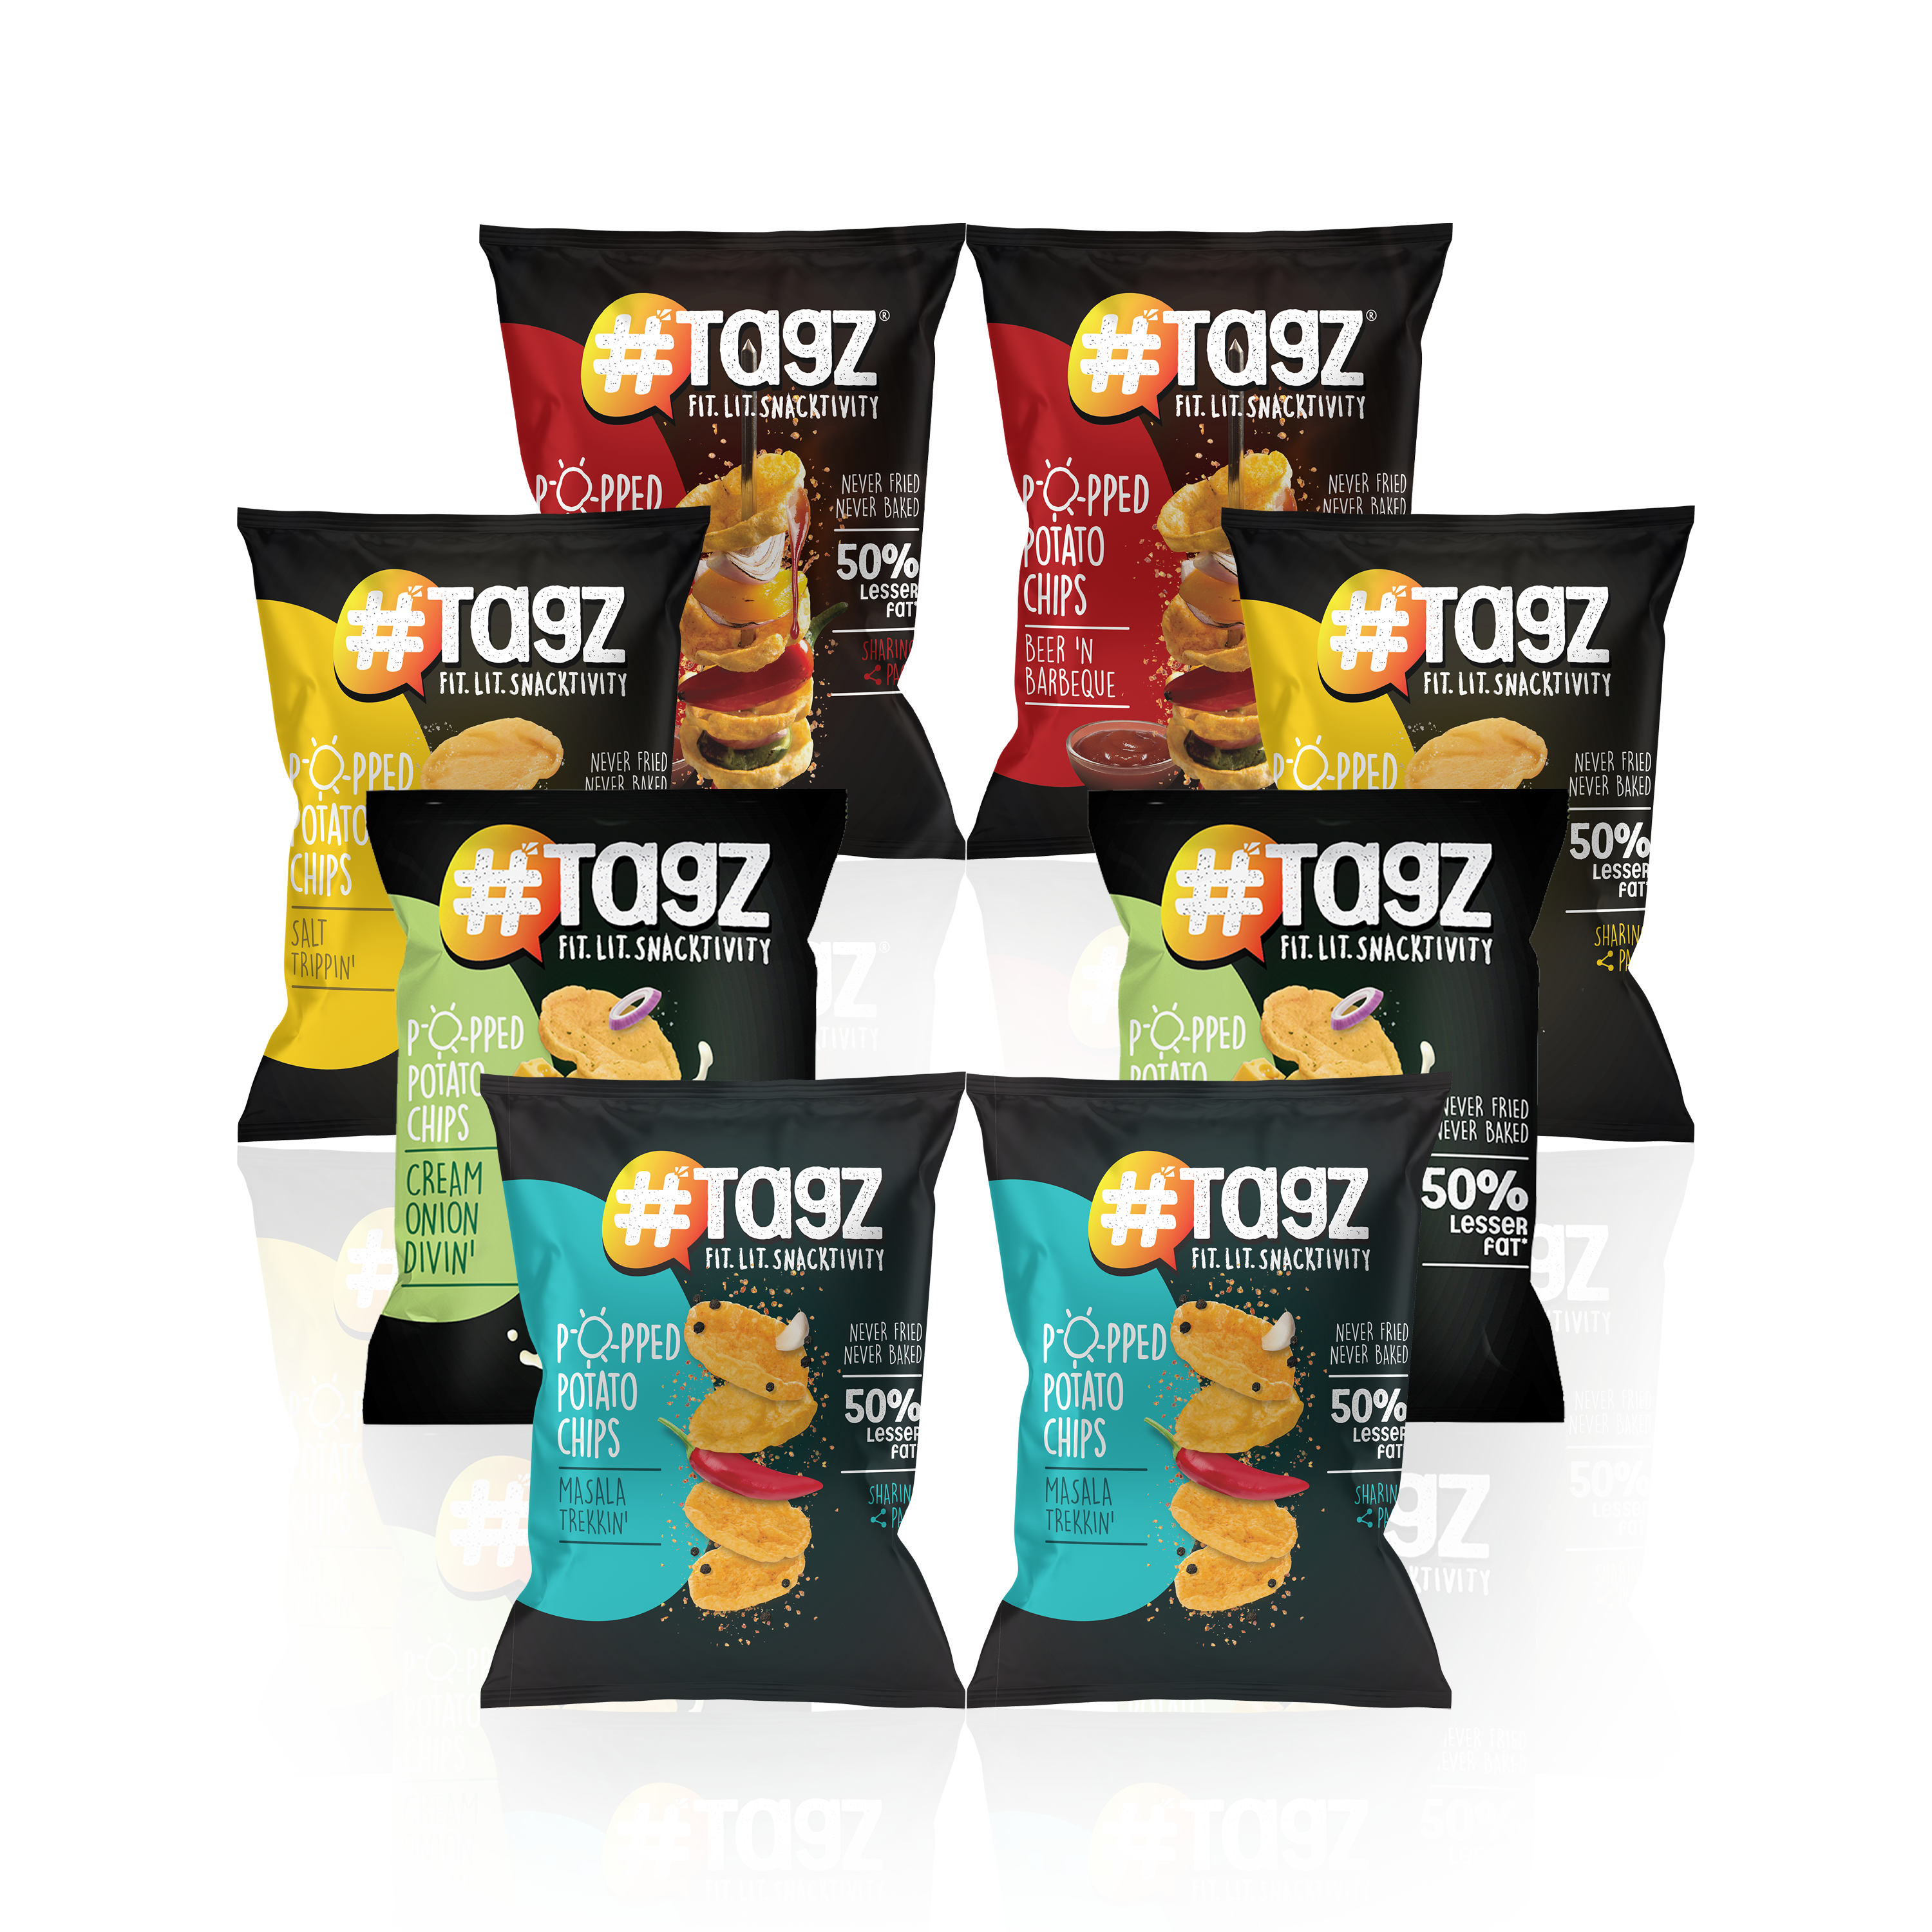 TagZ Popped Potato Chips - Pack of 8 | 44gms each